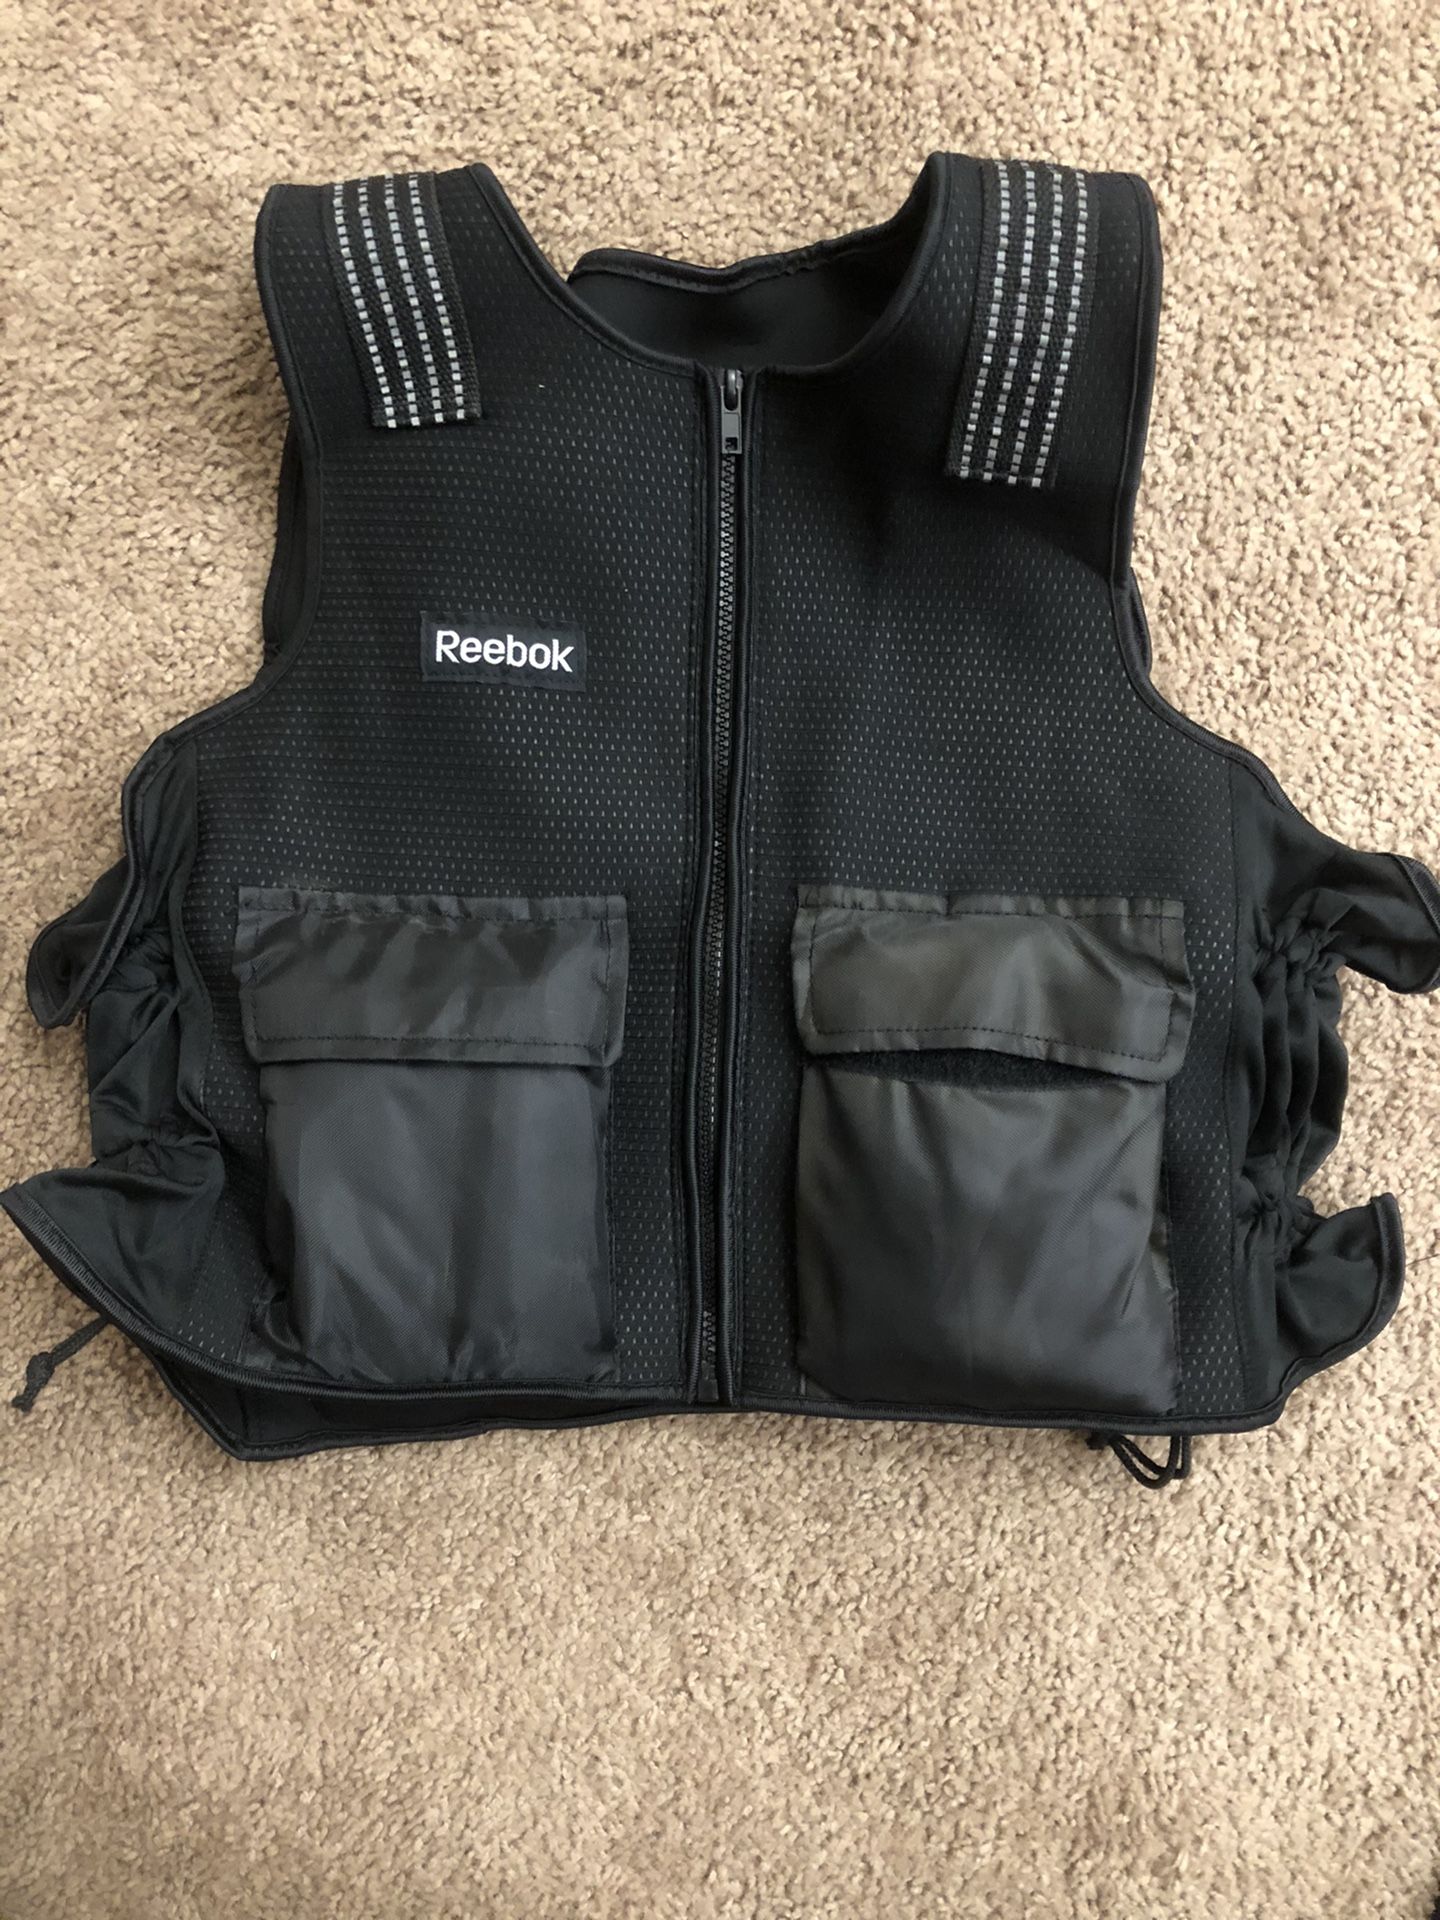 Reebok 10lb Adjustable Weight Vest